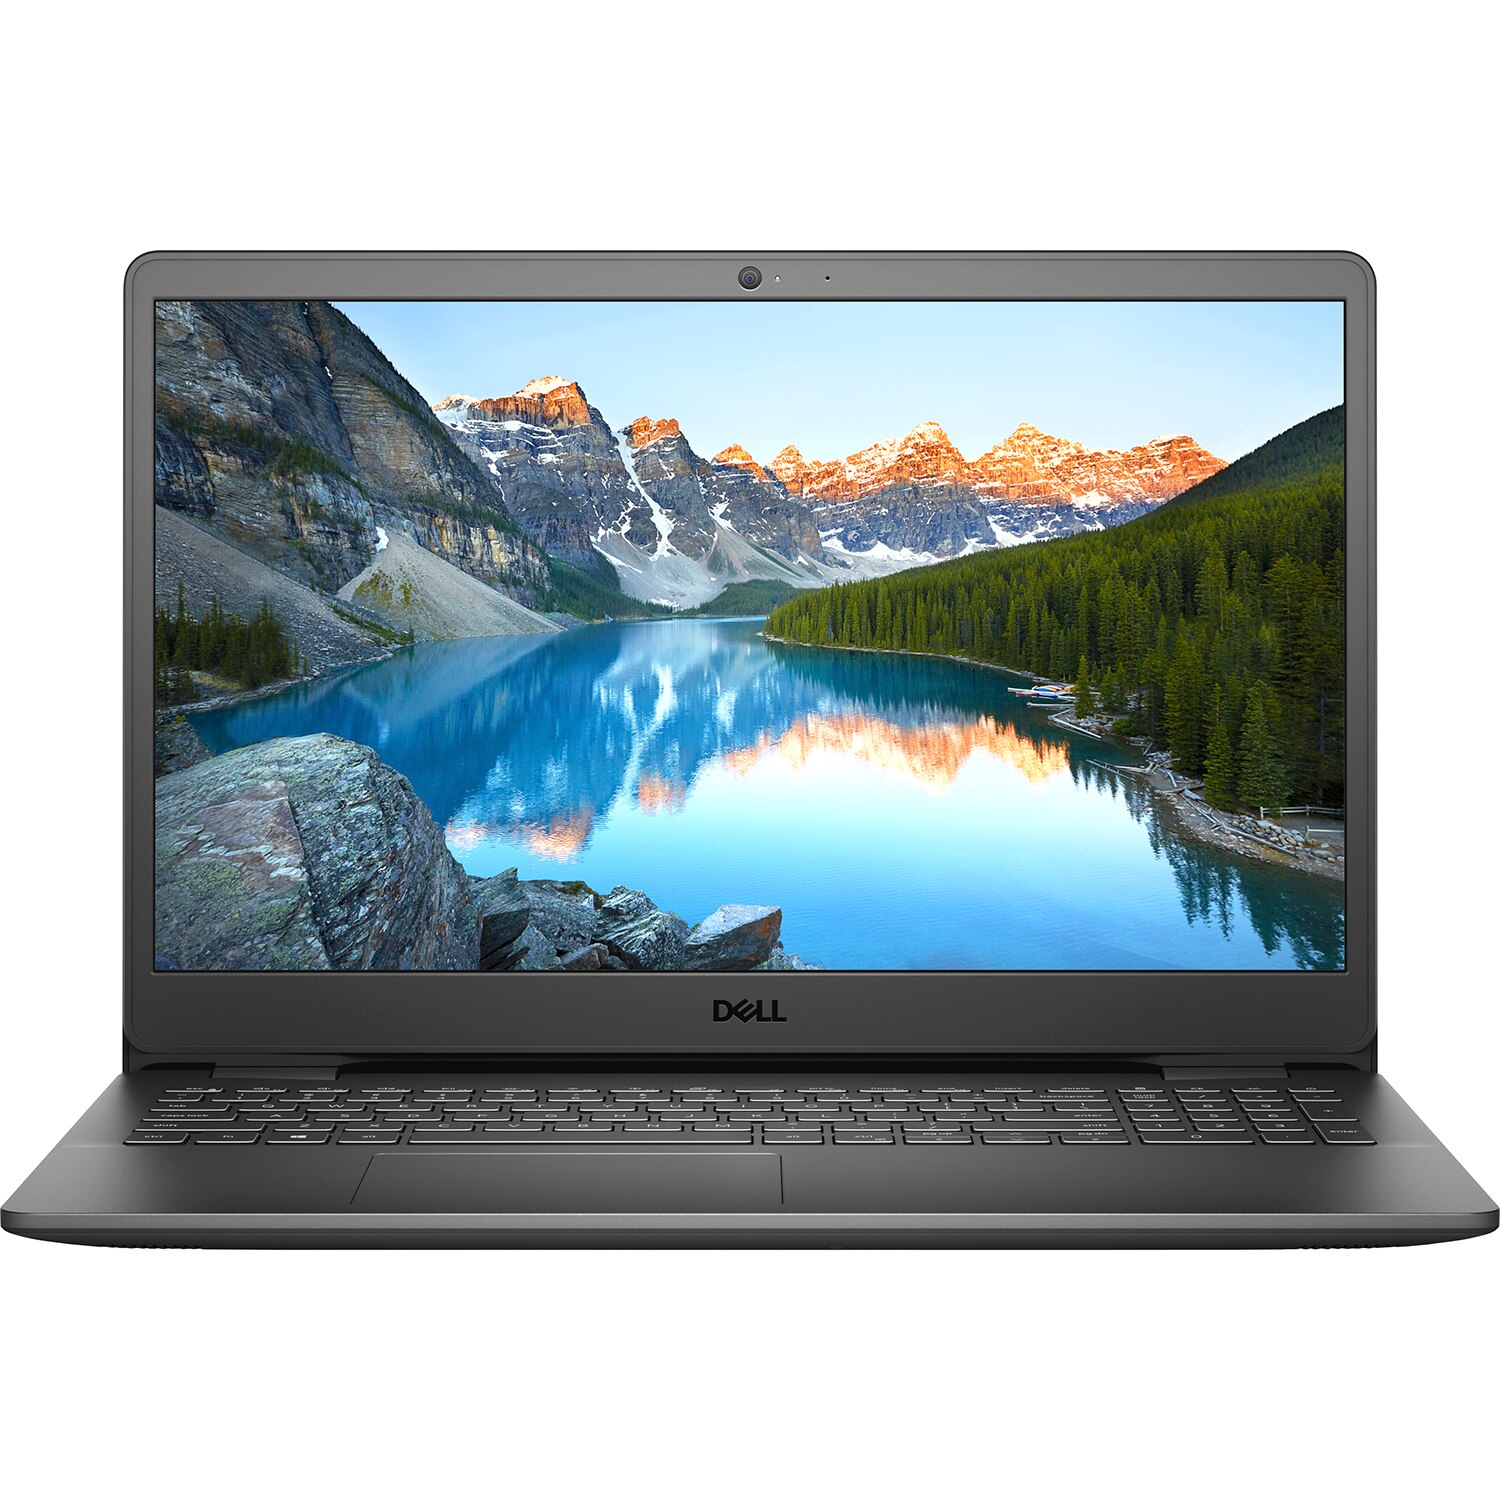 Dell Inspiron 15 3000 Non Touch Laptop, Black